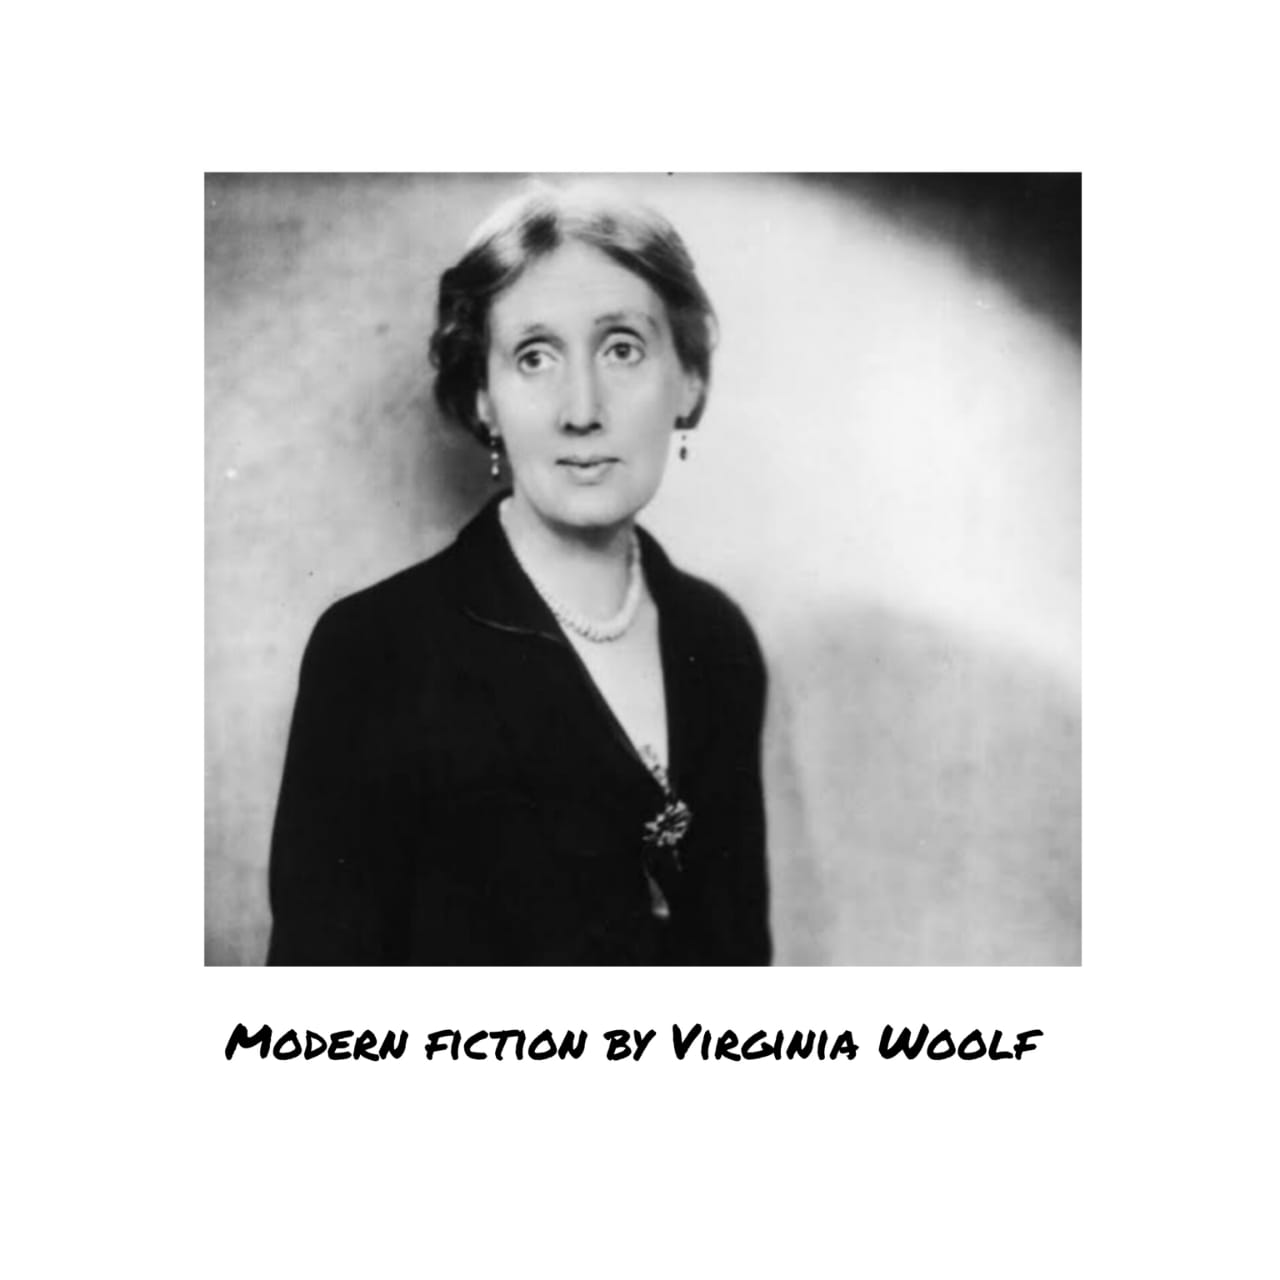 virginia woolf essay modern fiction